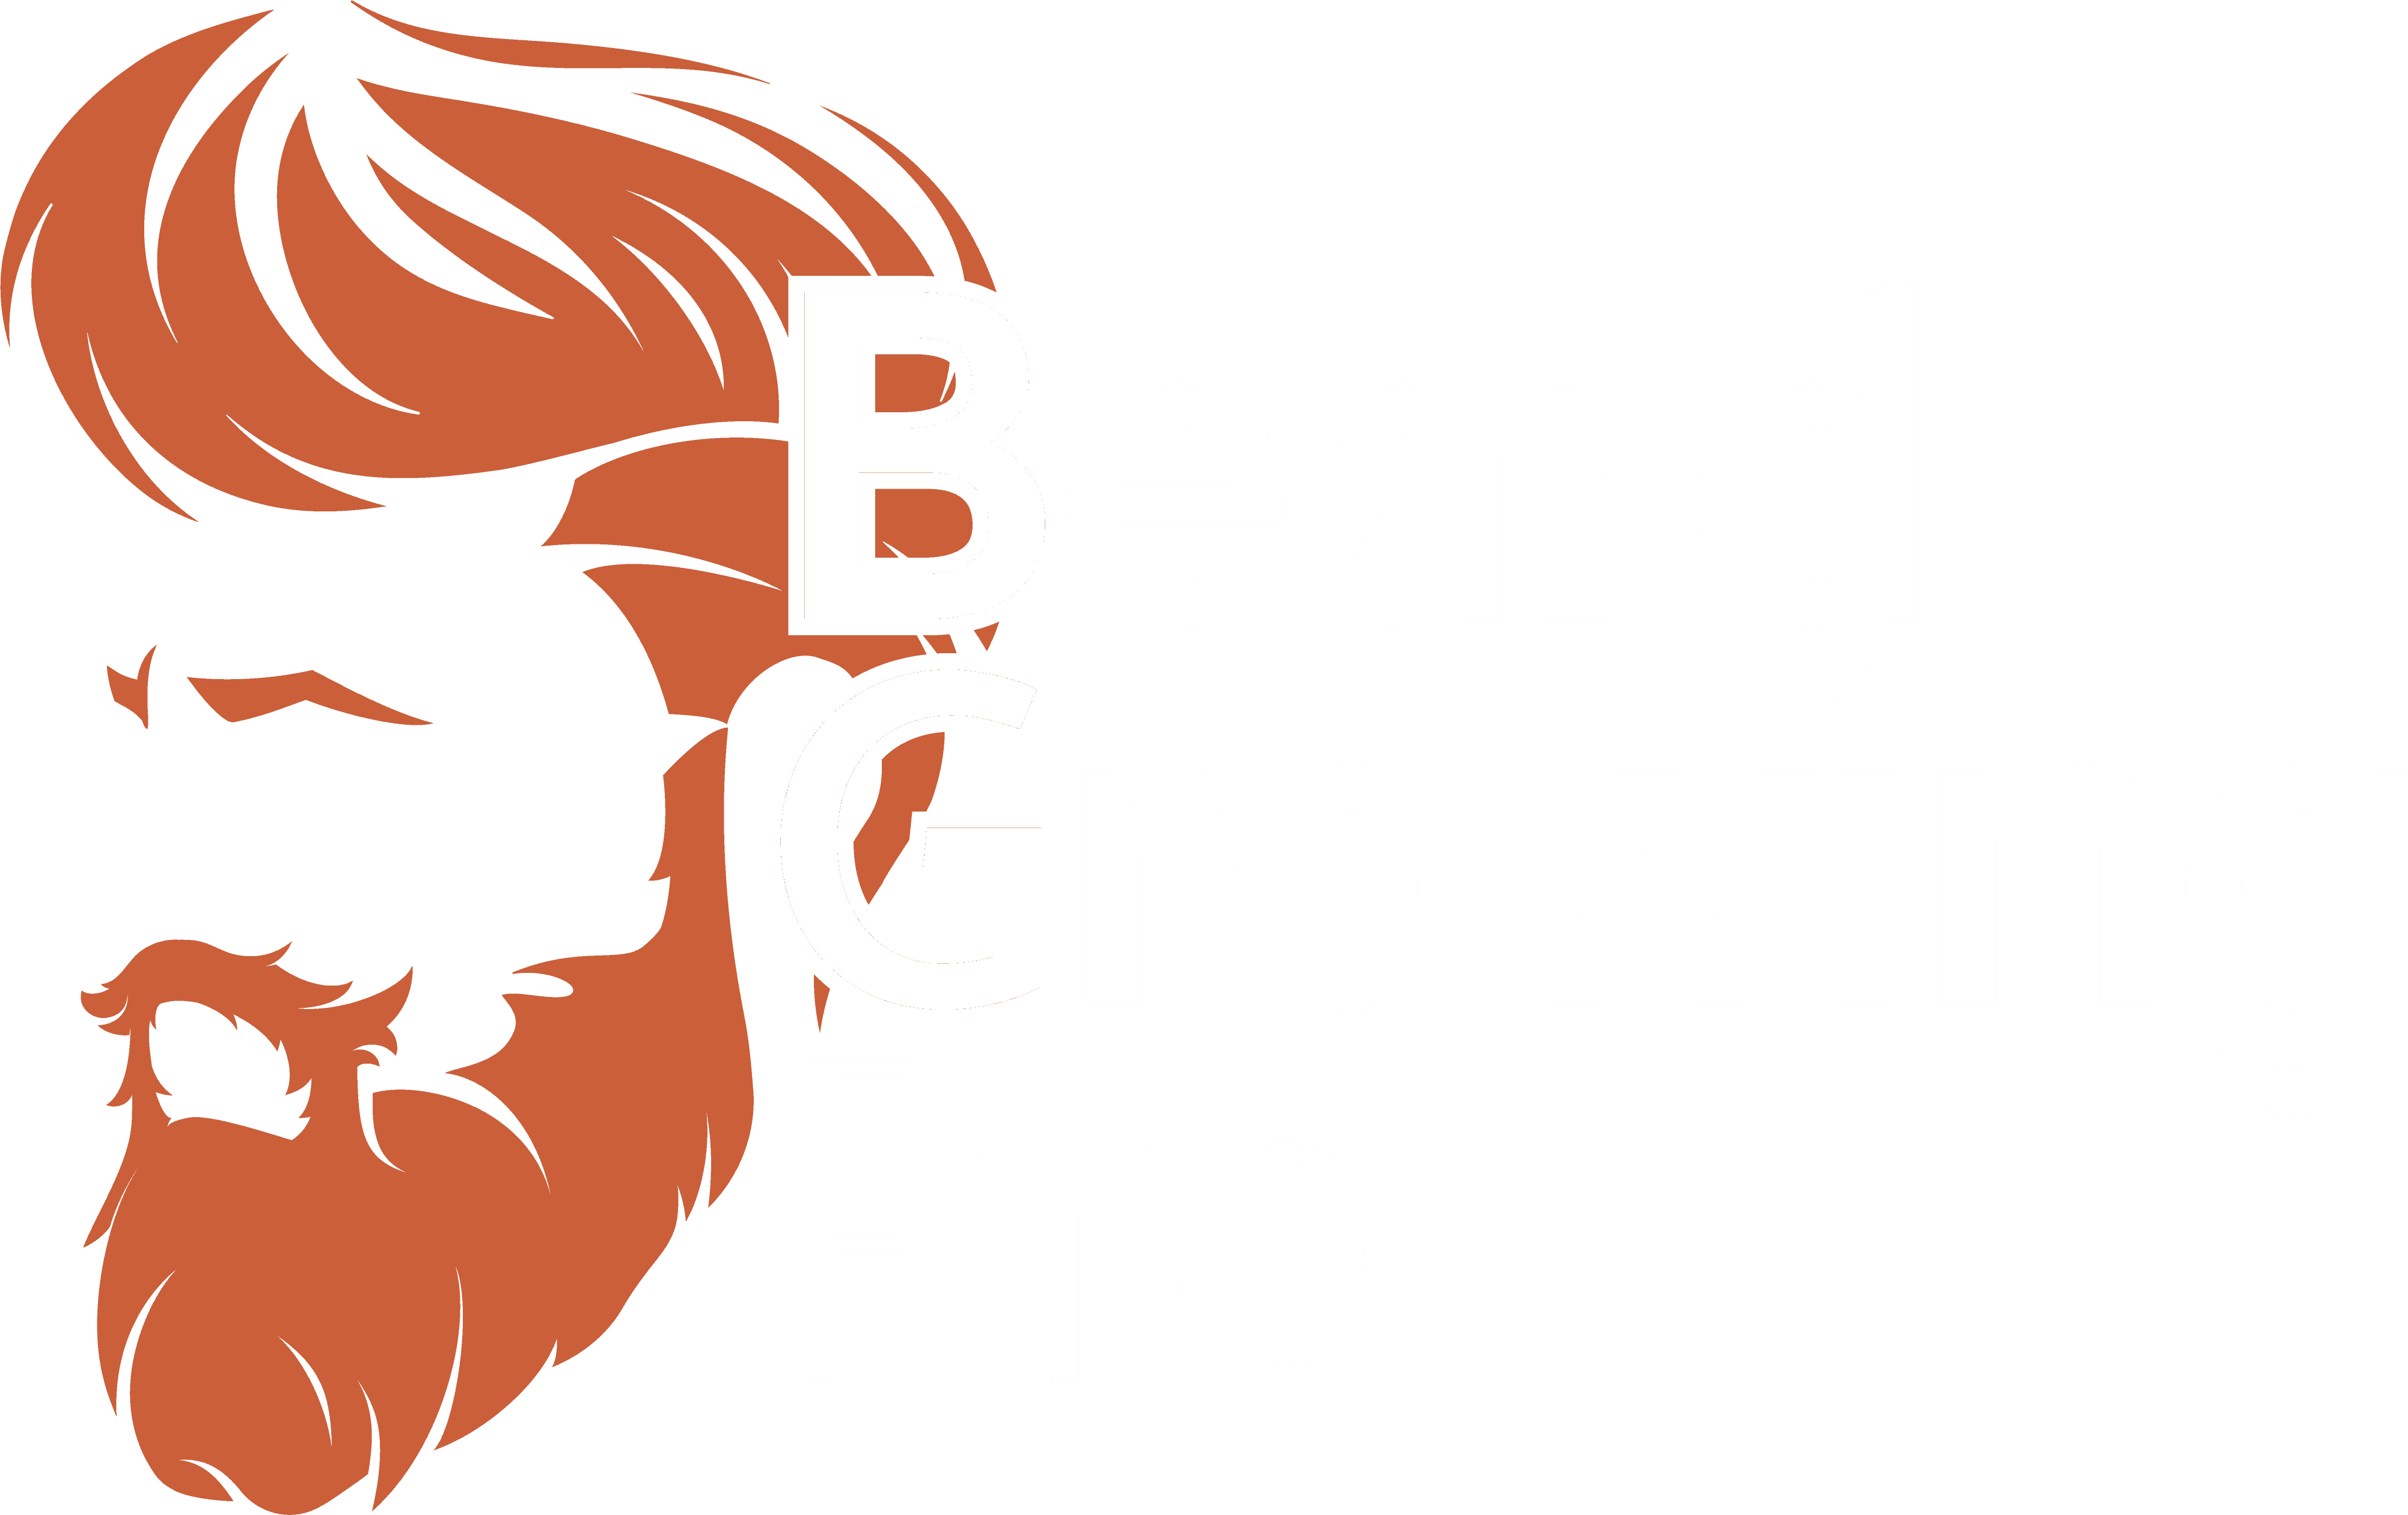 A Logo For A Beard Growing Pro